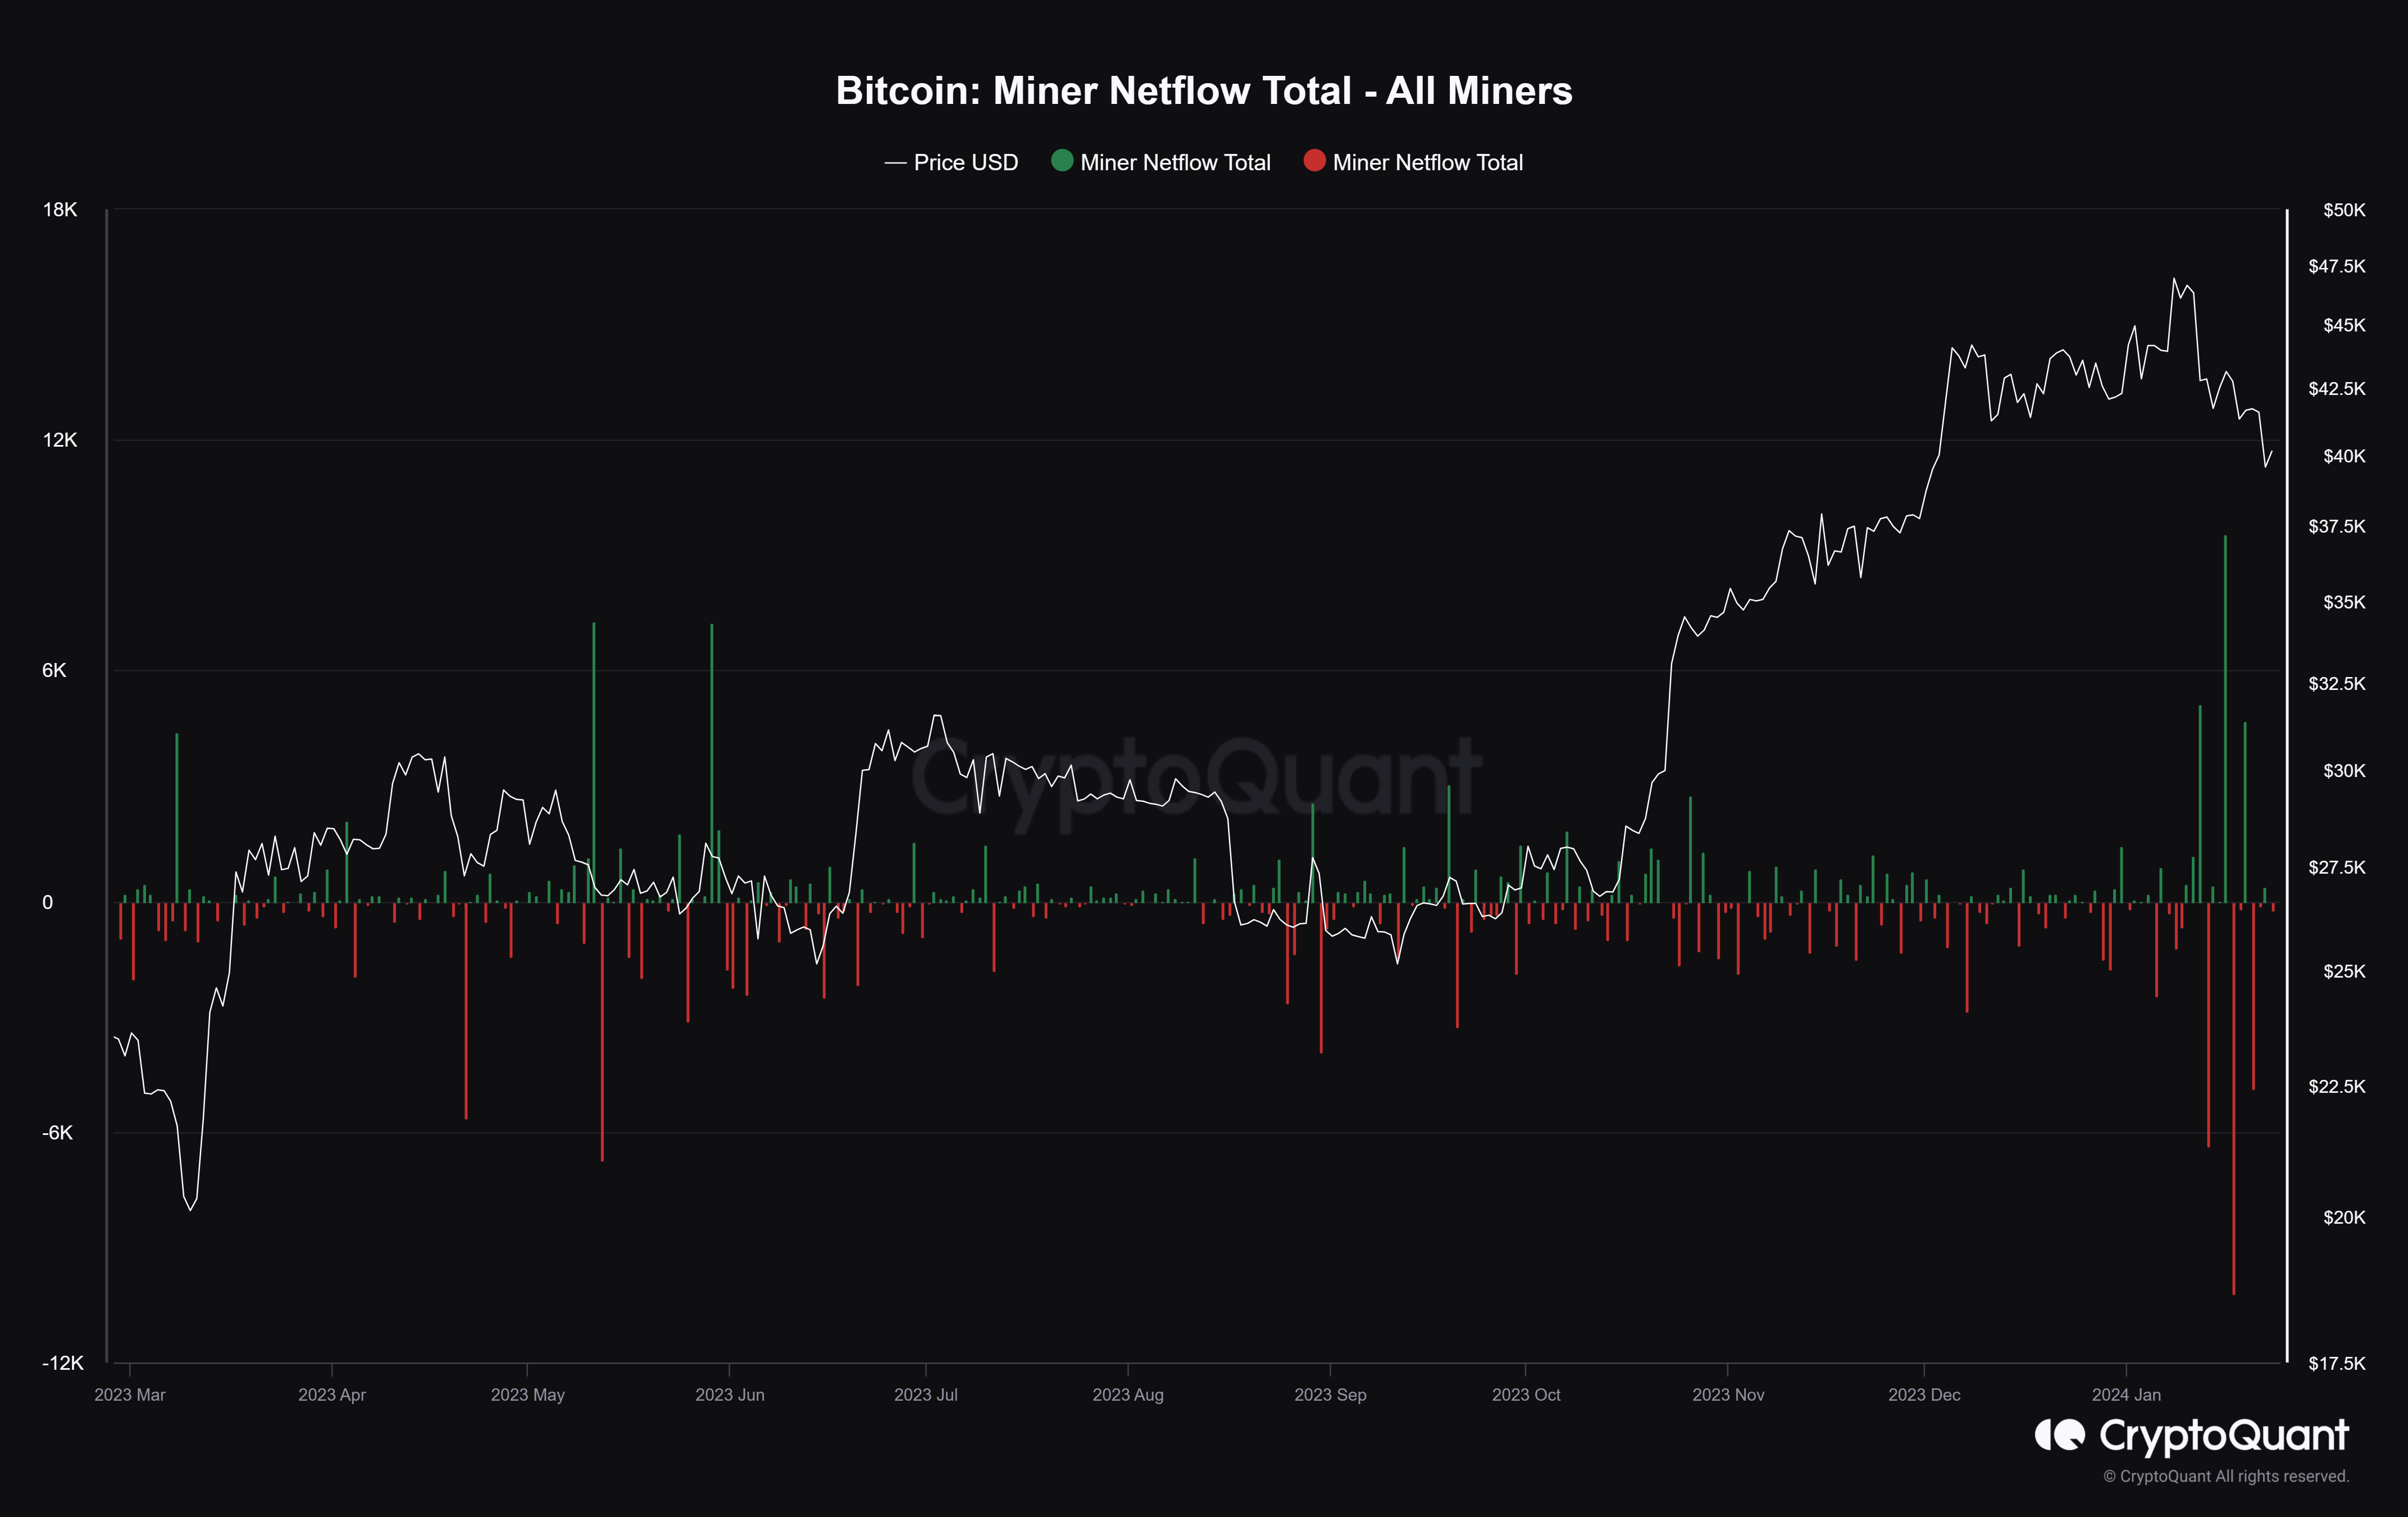 Bitcoin miner net flows